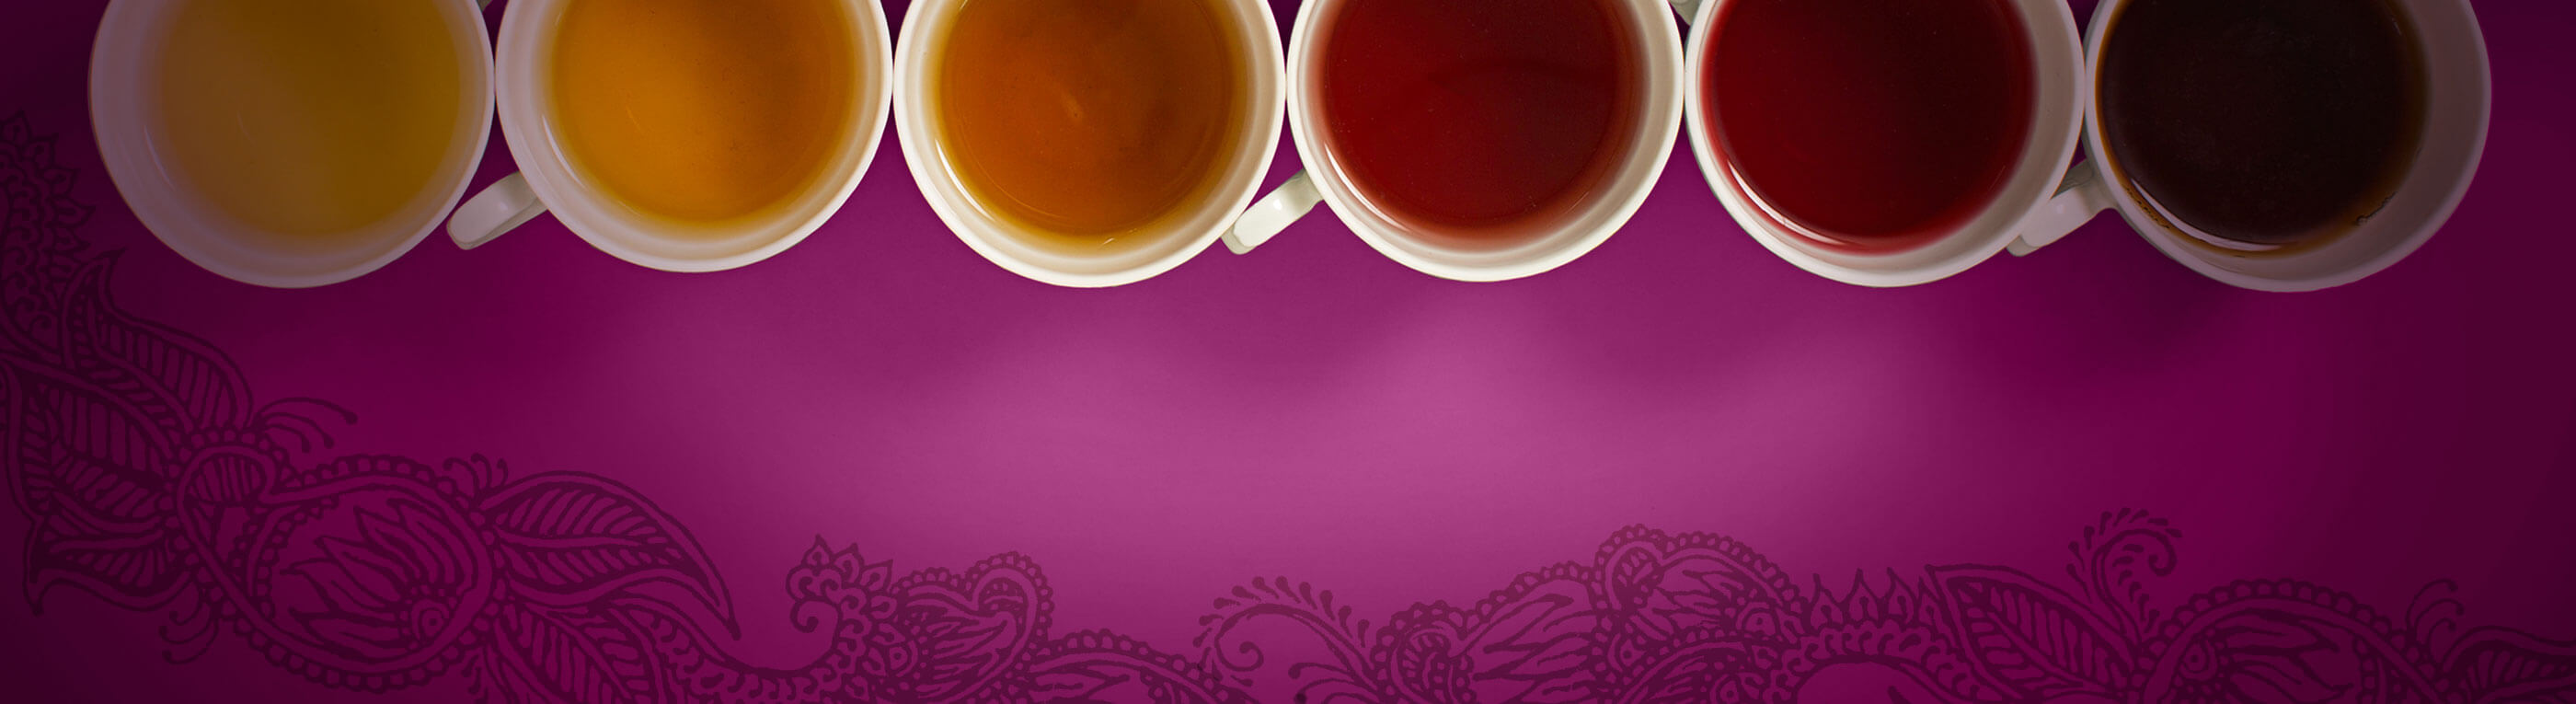 Yogi Tea Finest Collection - Yogi Tea